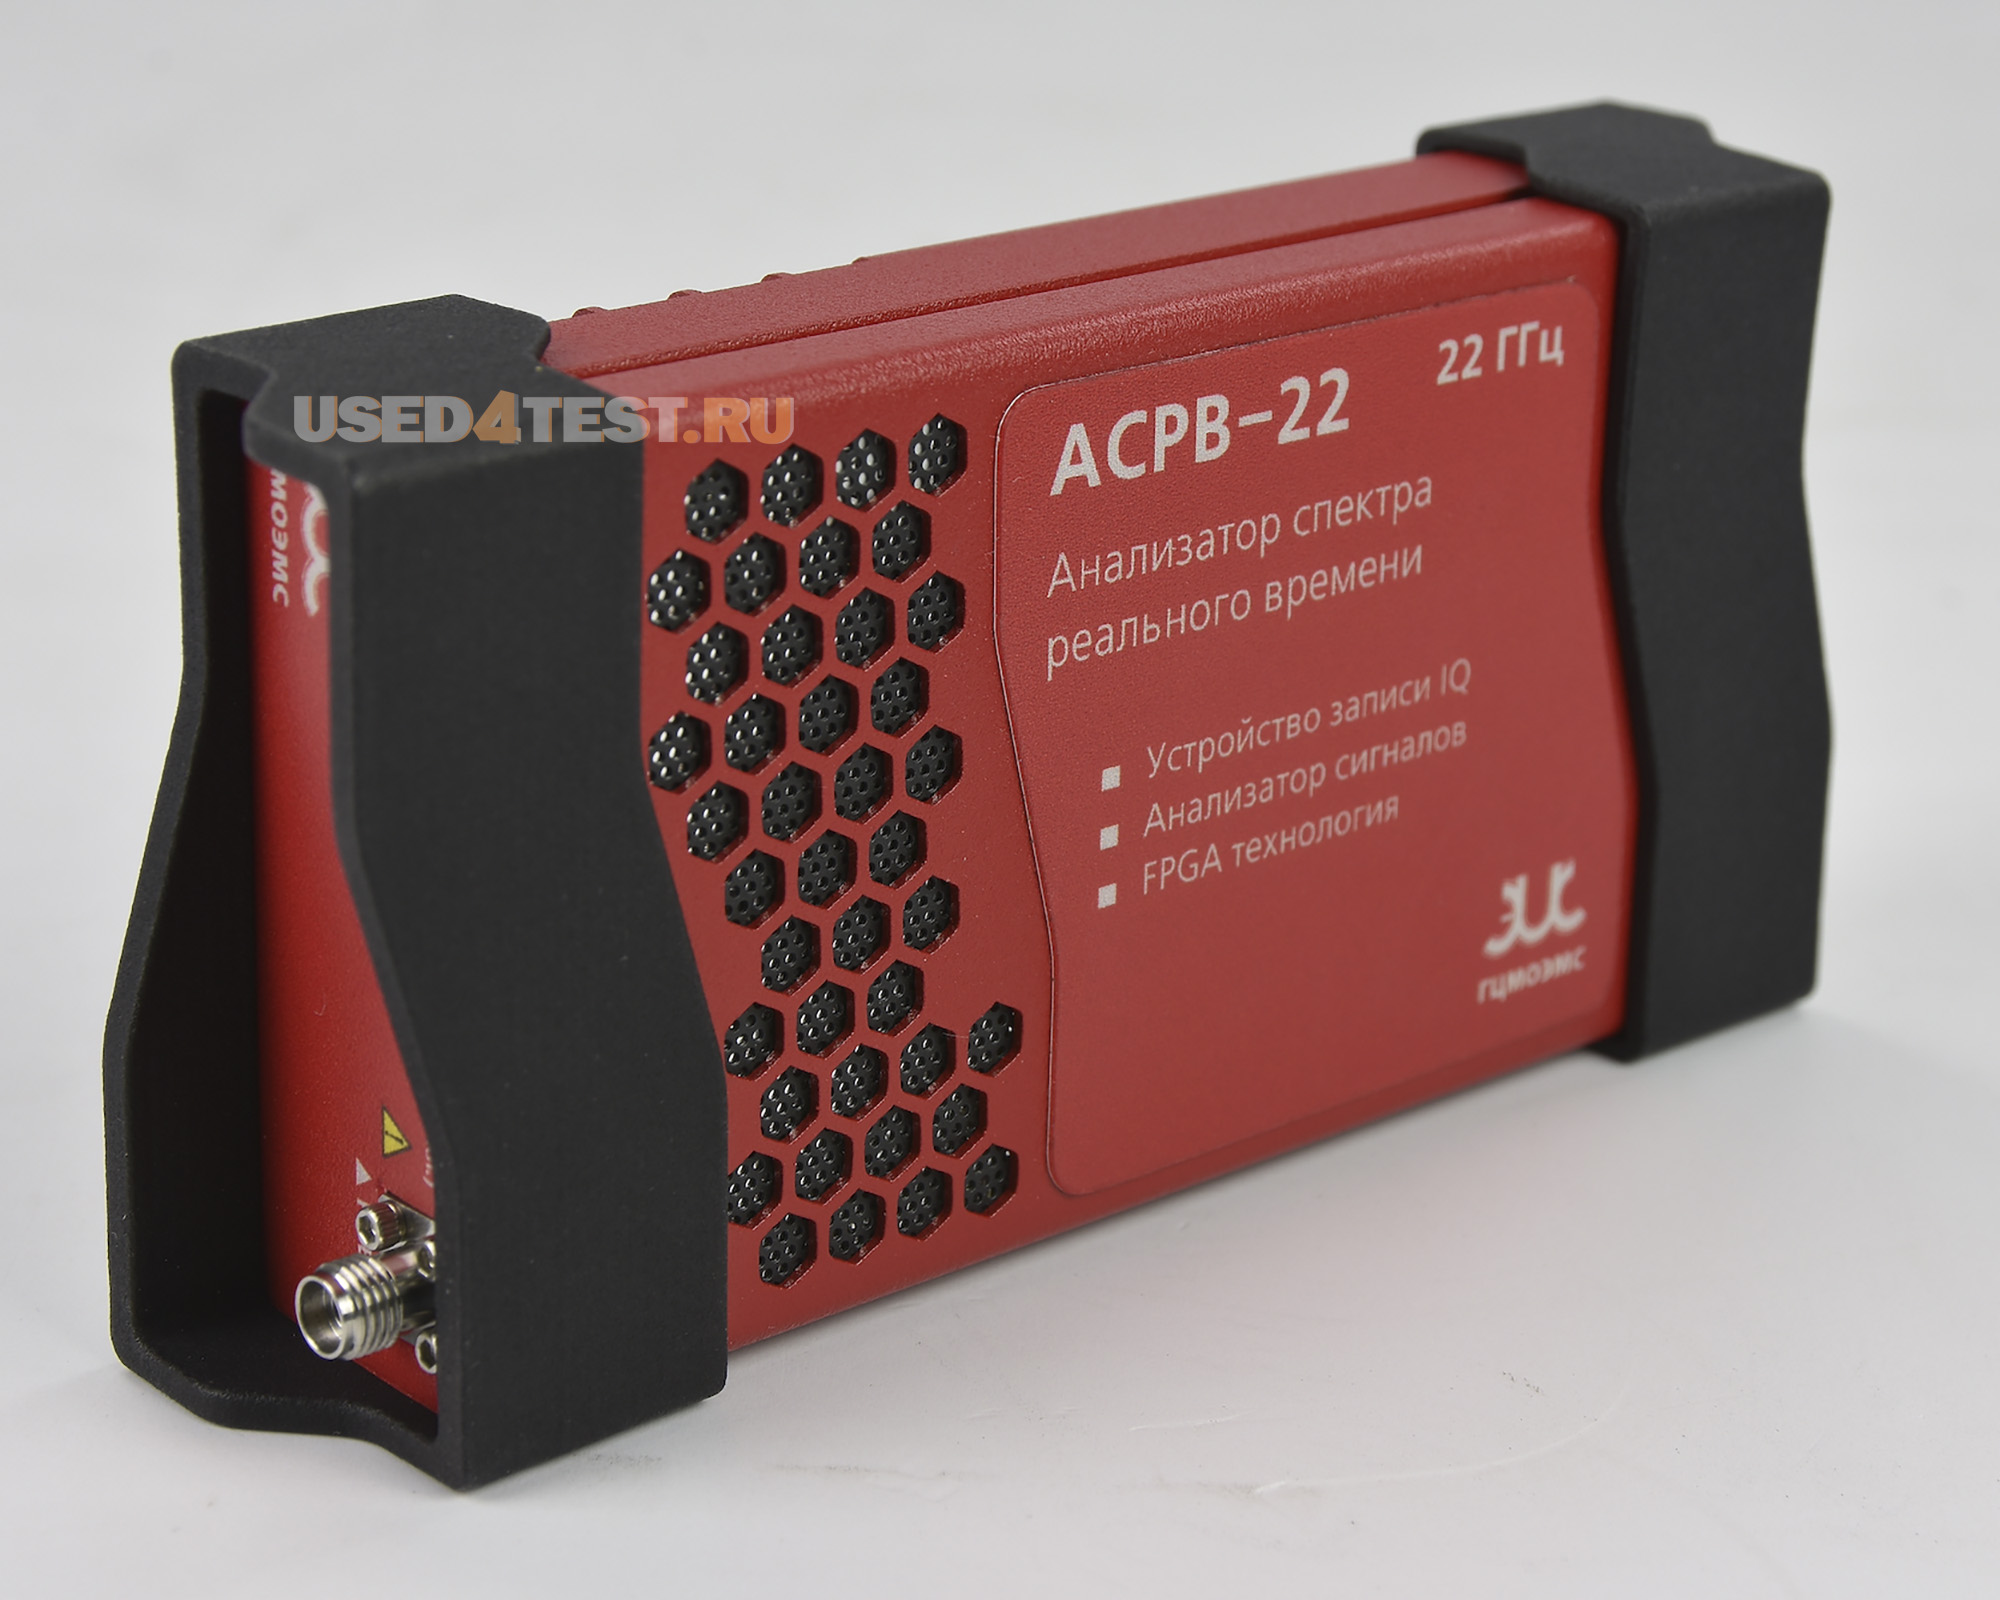 Анализатор спектра реального времени
ГЦМО ЭМС АСРВ-22
с диапазоном от 9 кГц до 22 ГГц